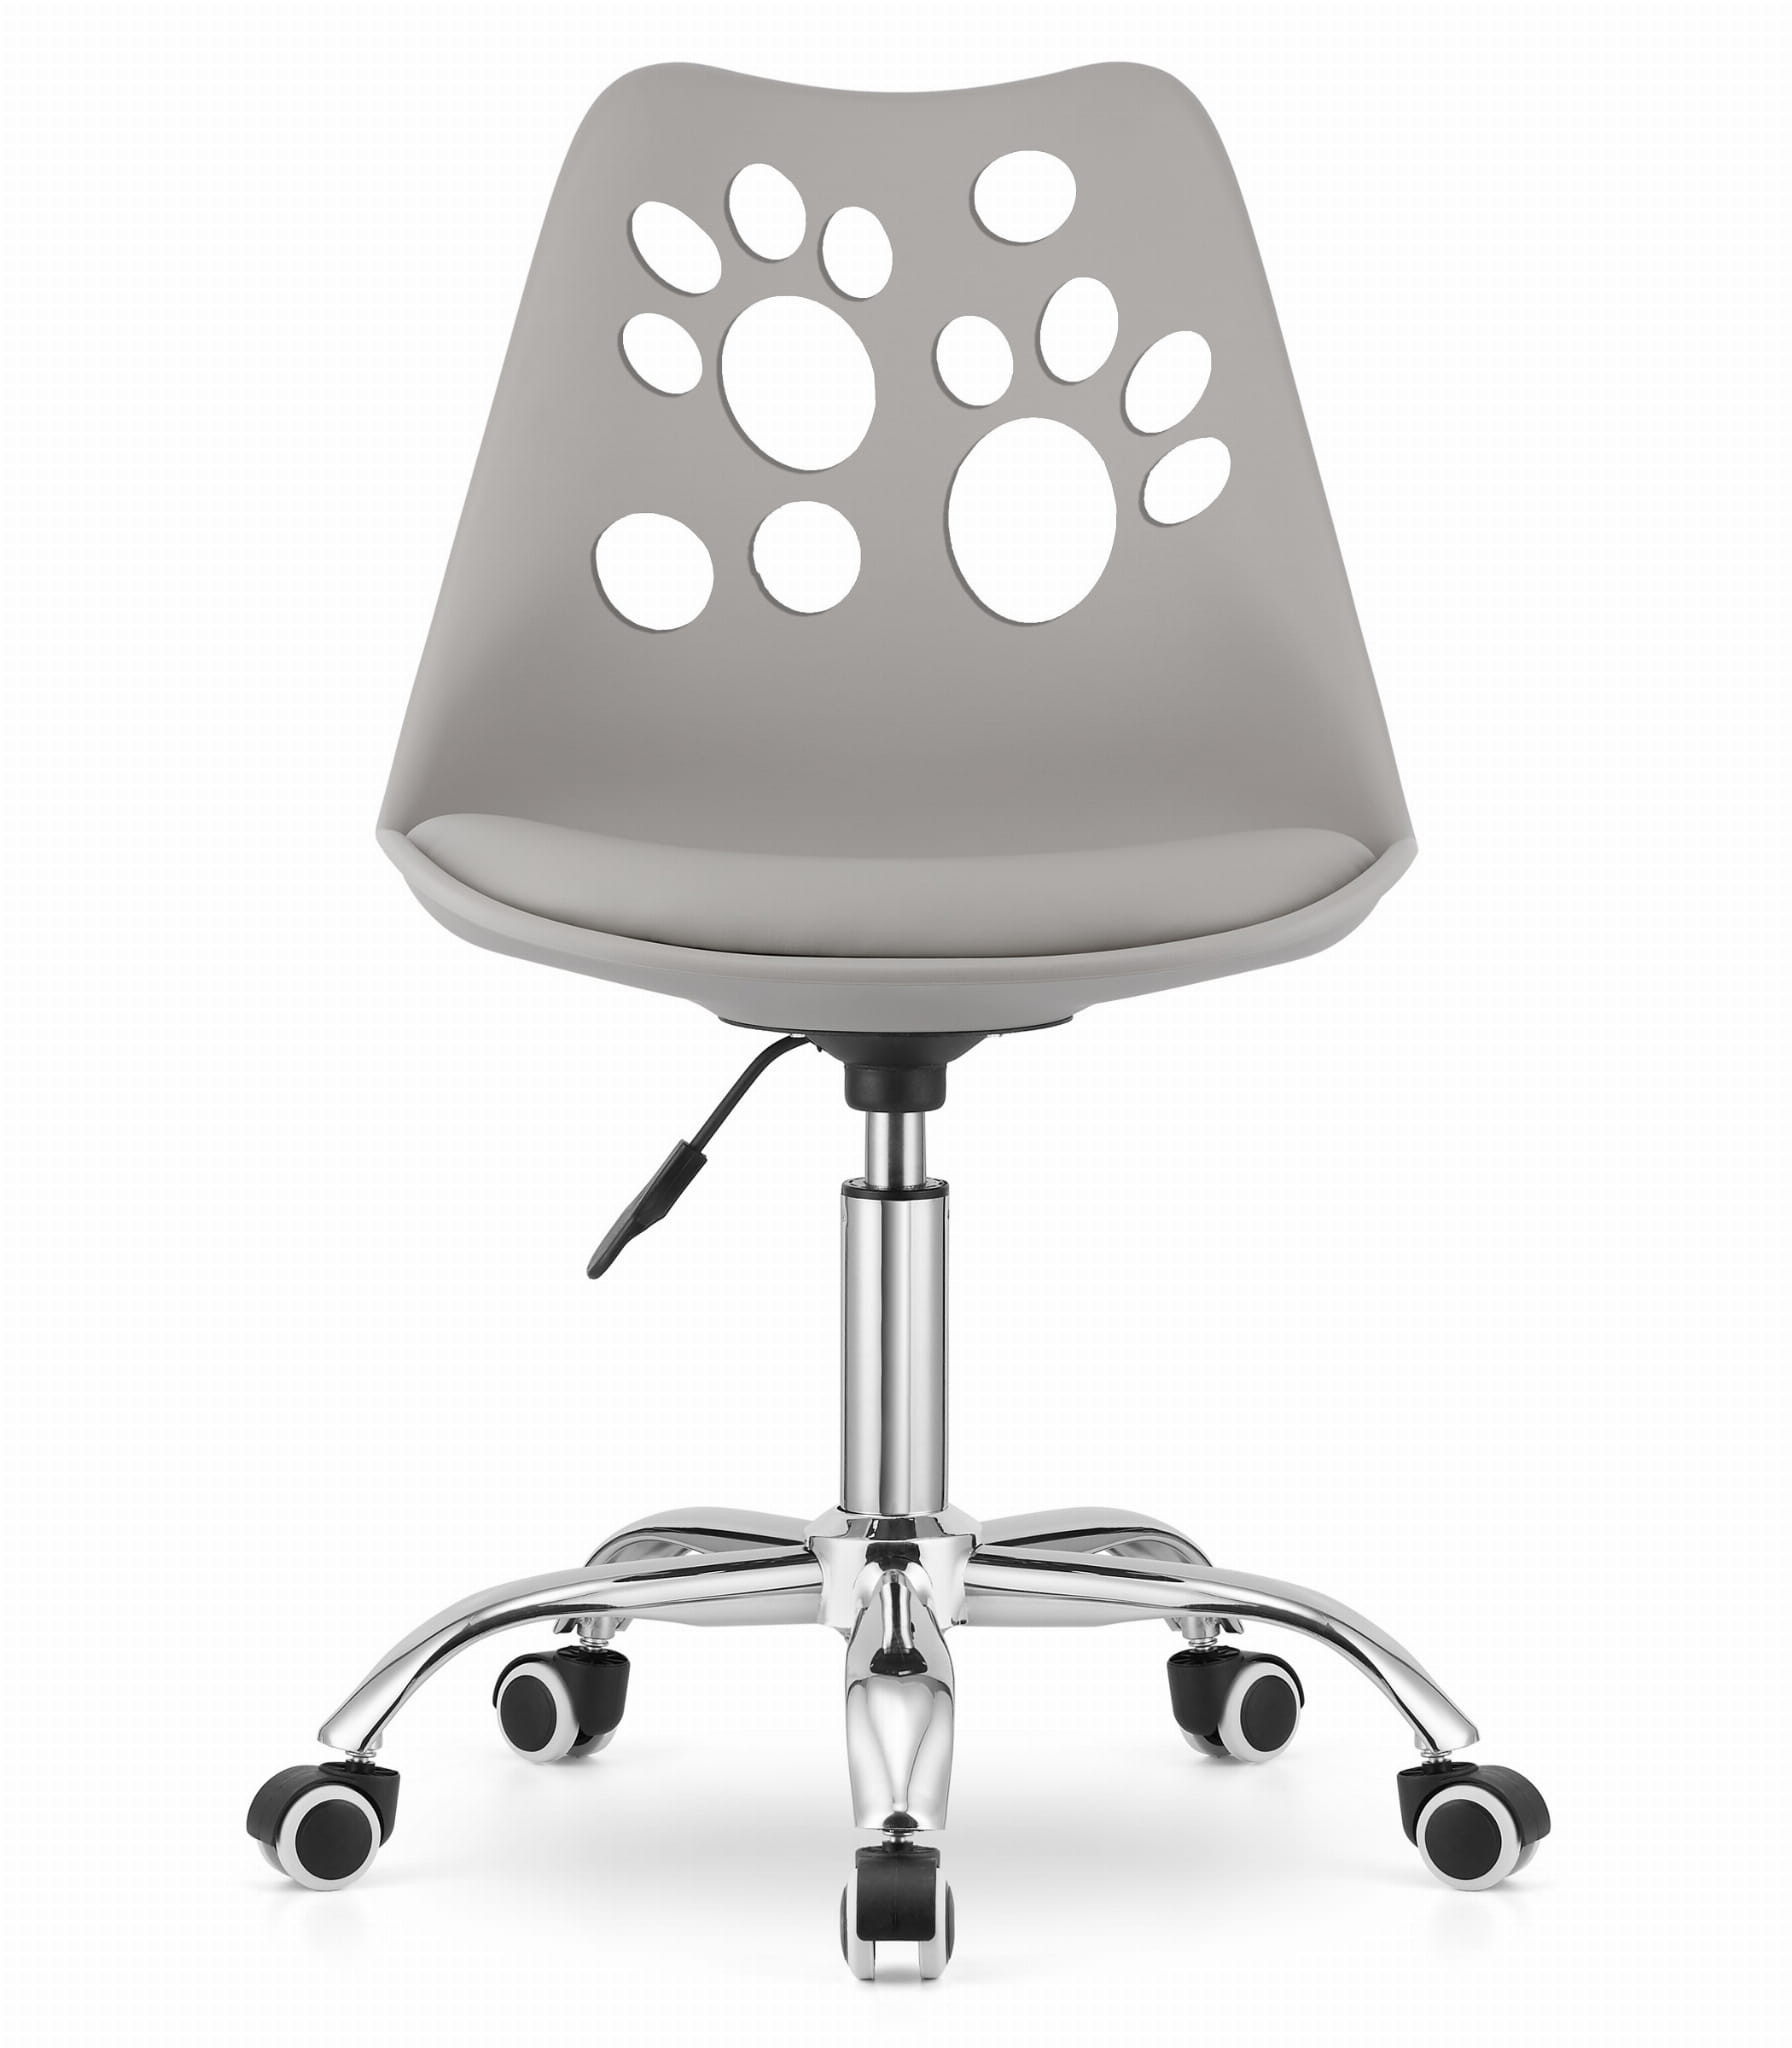 Otočná stolička PRINT - sivá